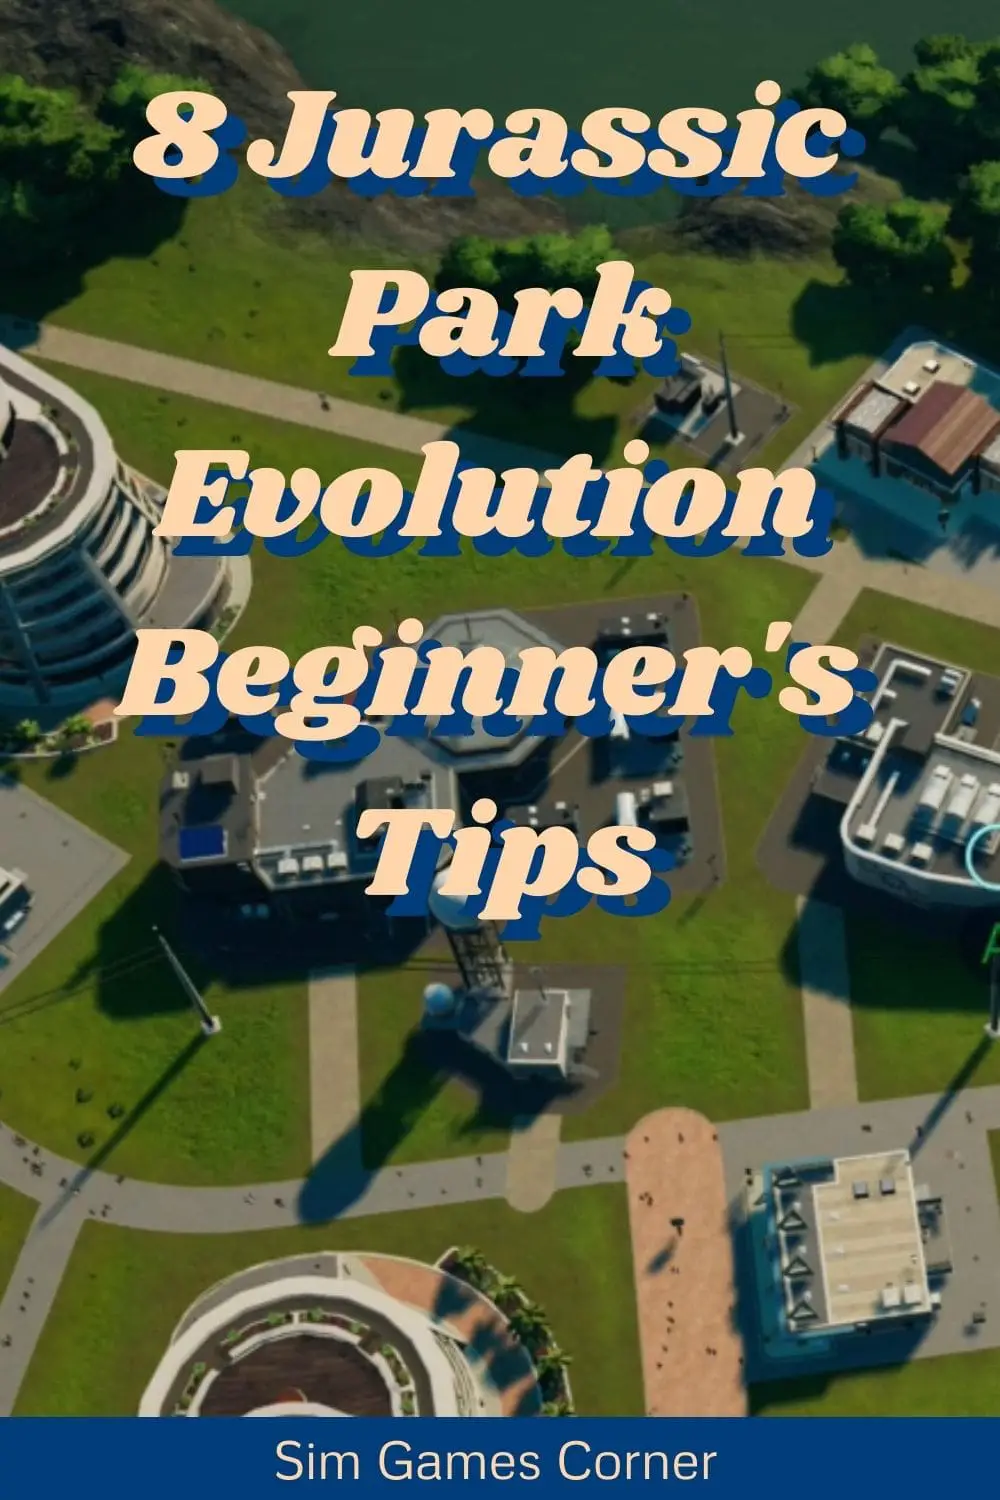 Jurassic Park Evolution beginners tips pin